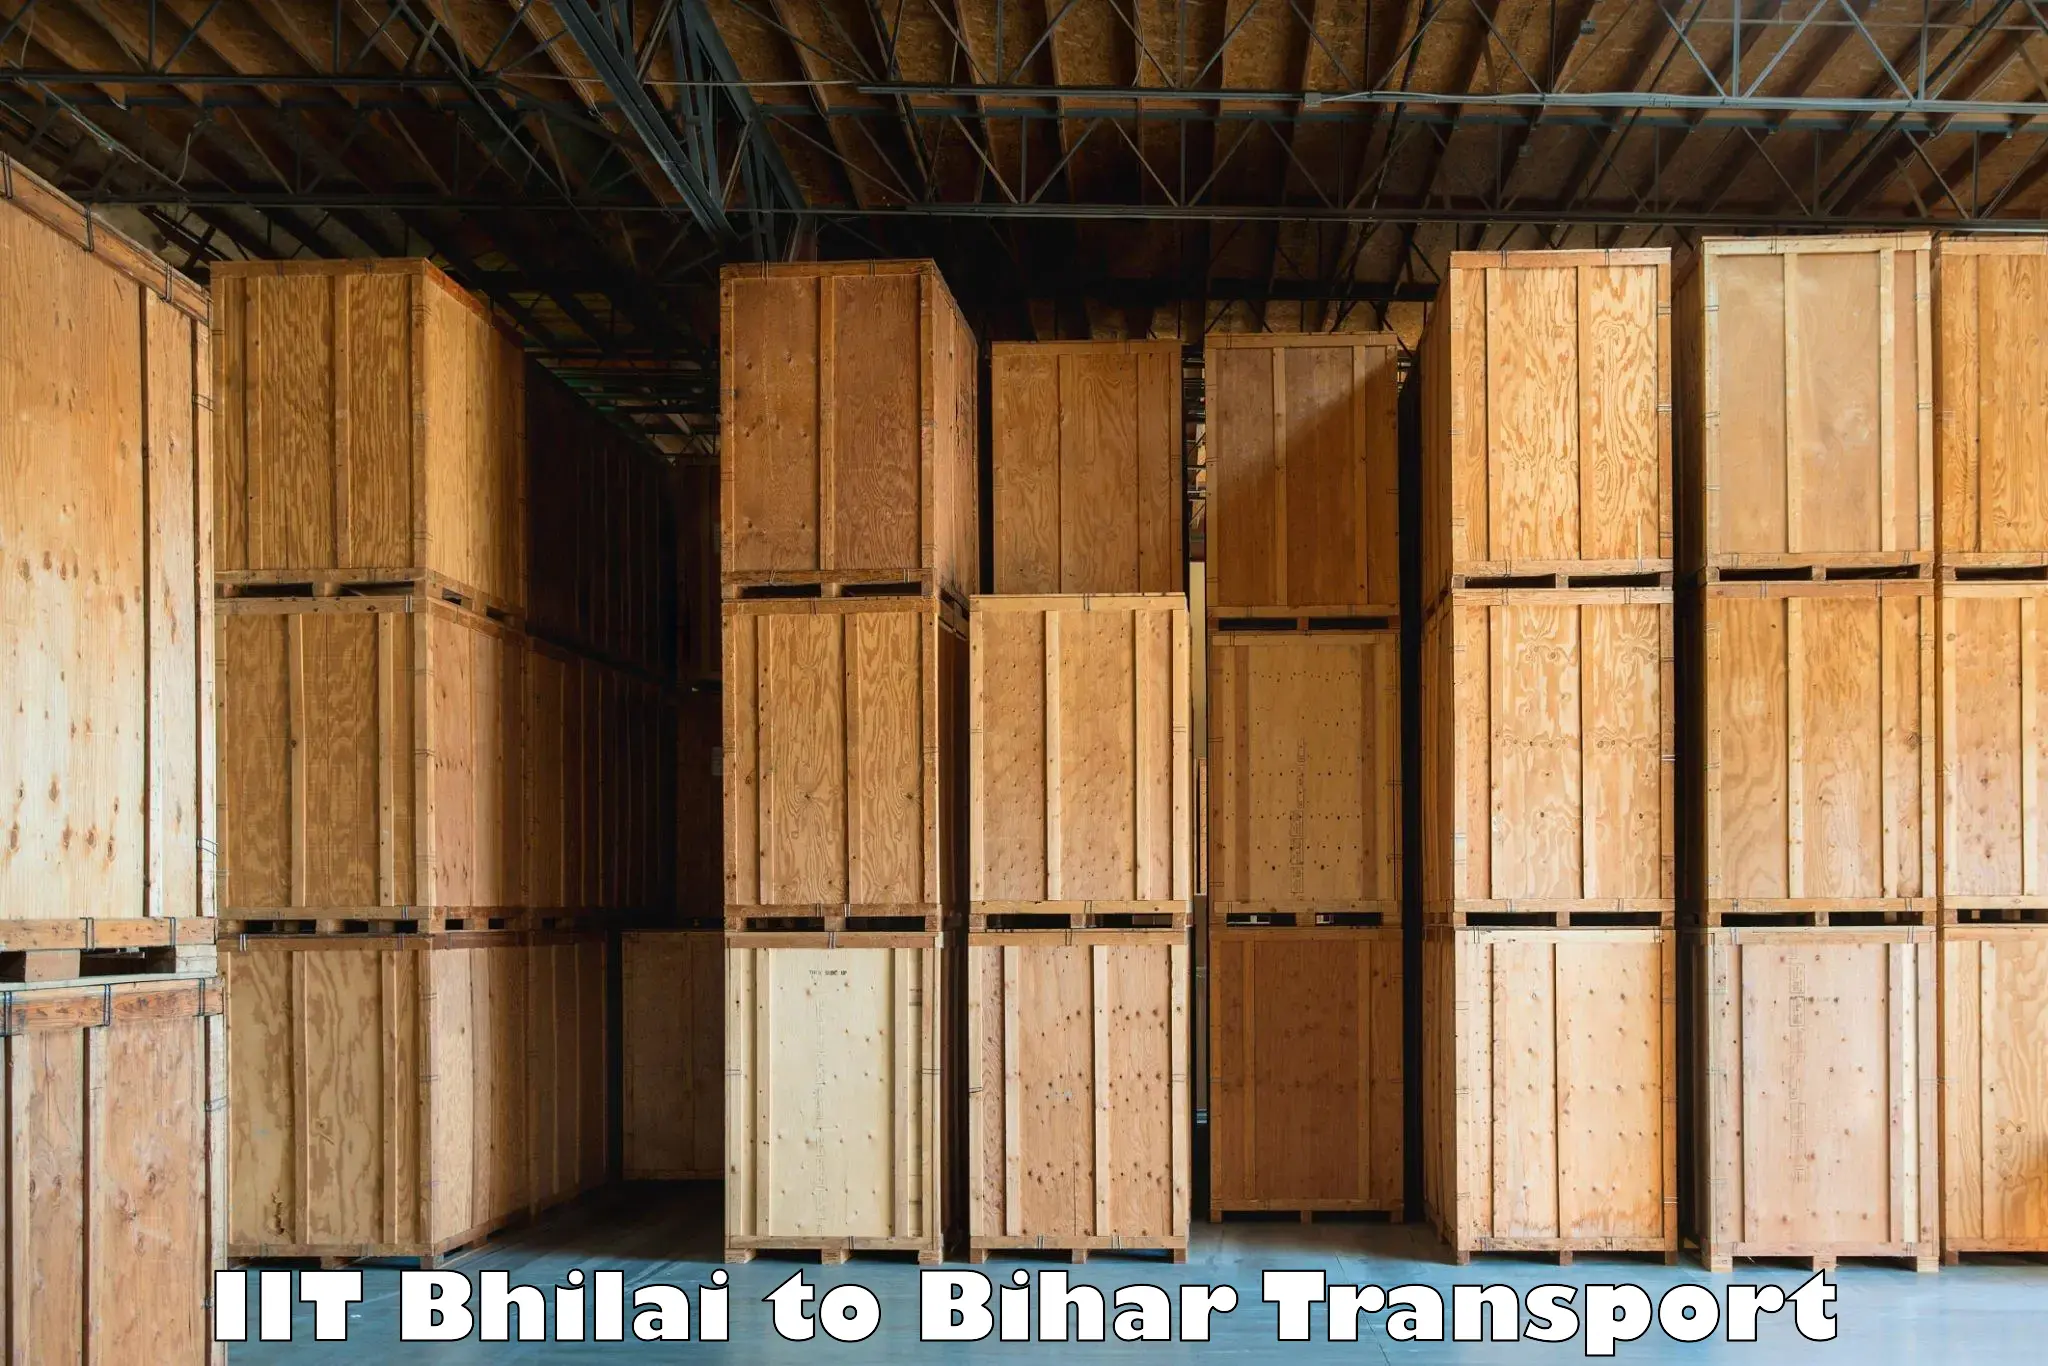 Cycle transportation service IIT Bhilai to Valmiki Nagar